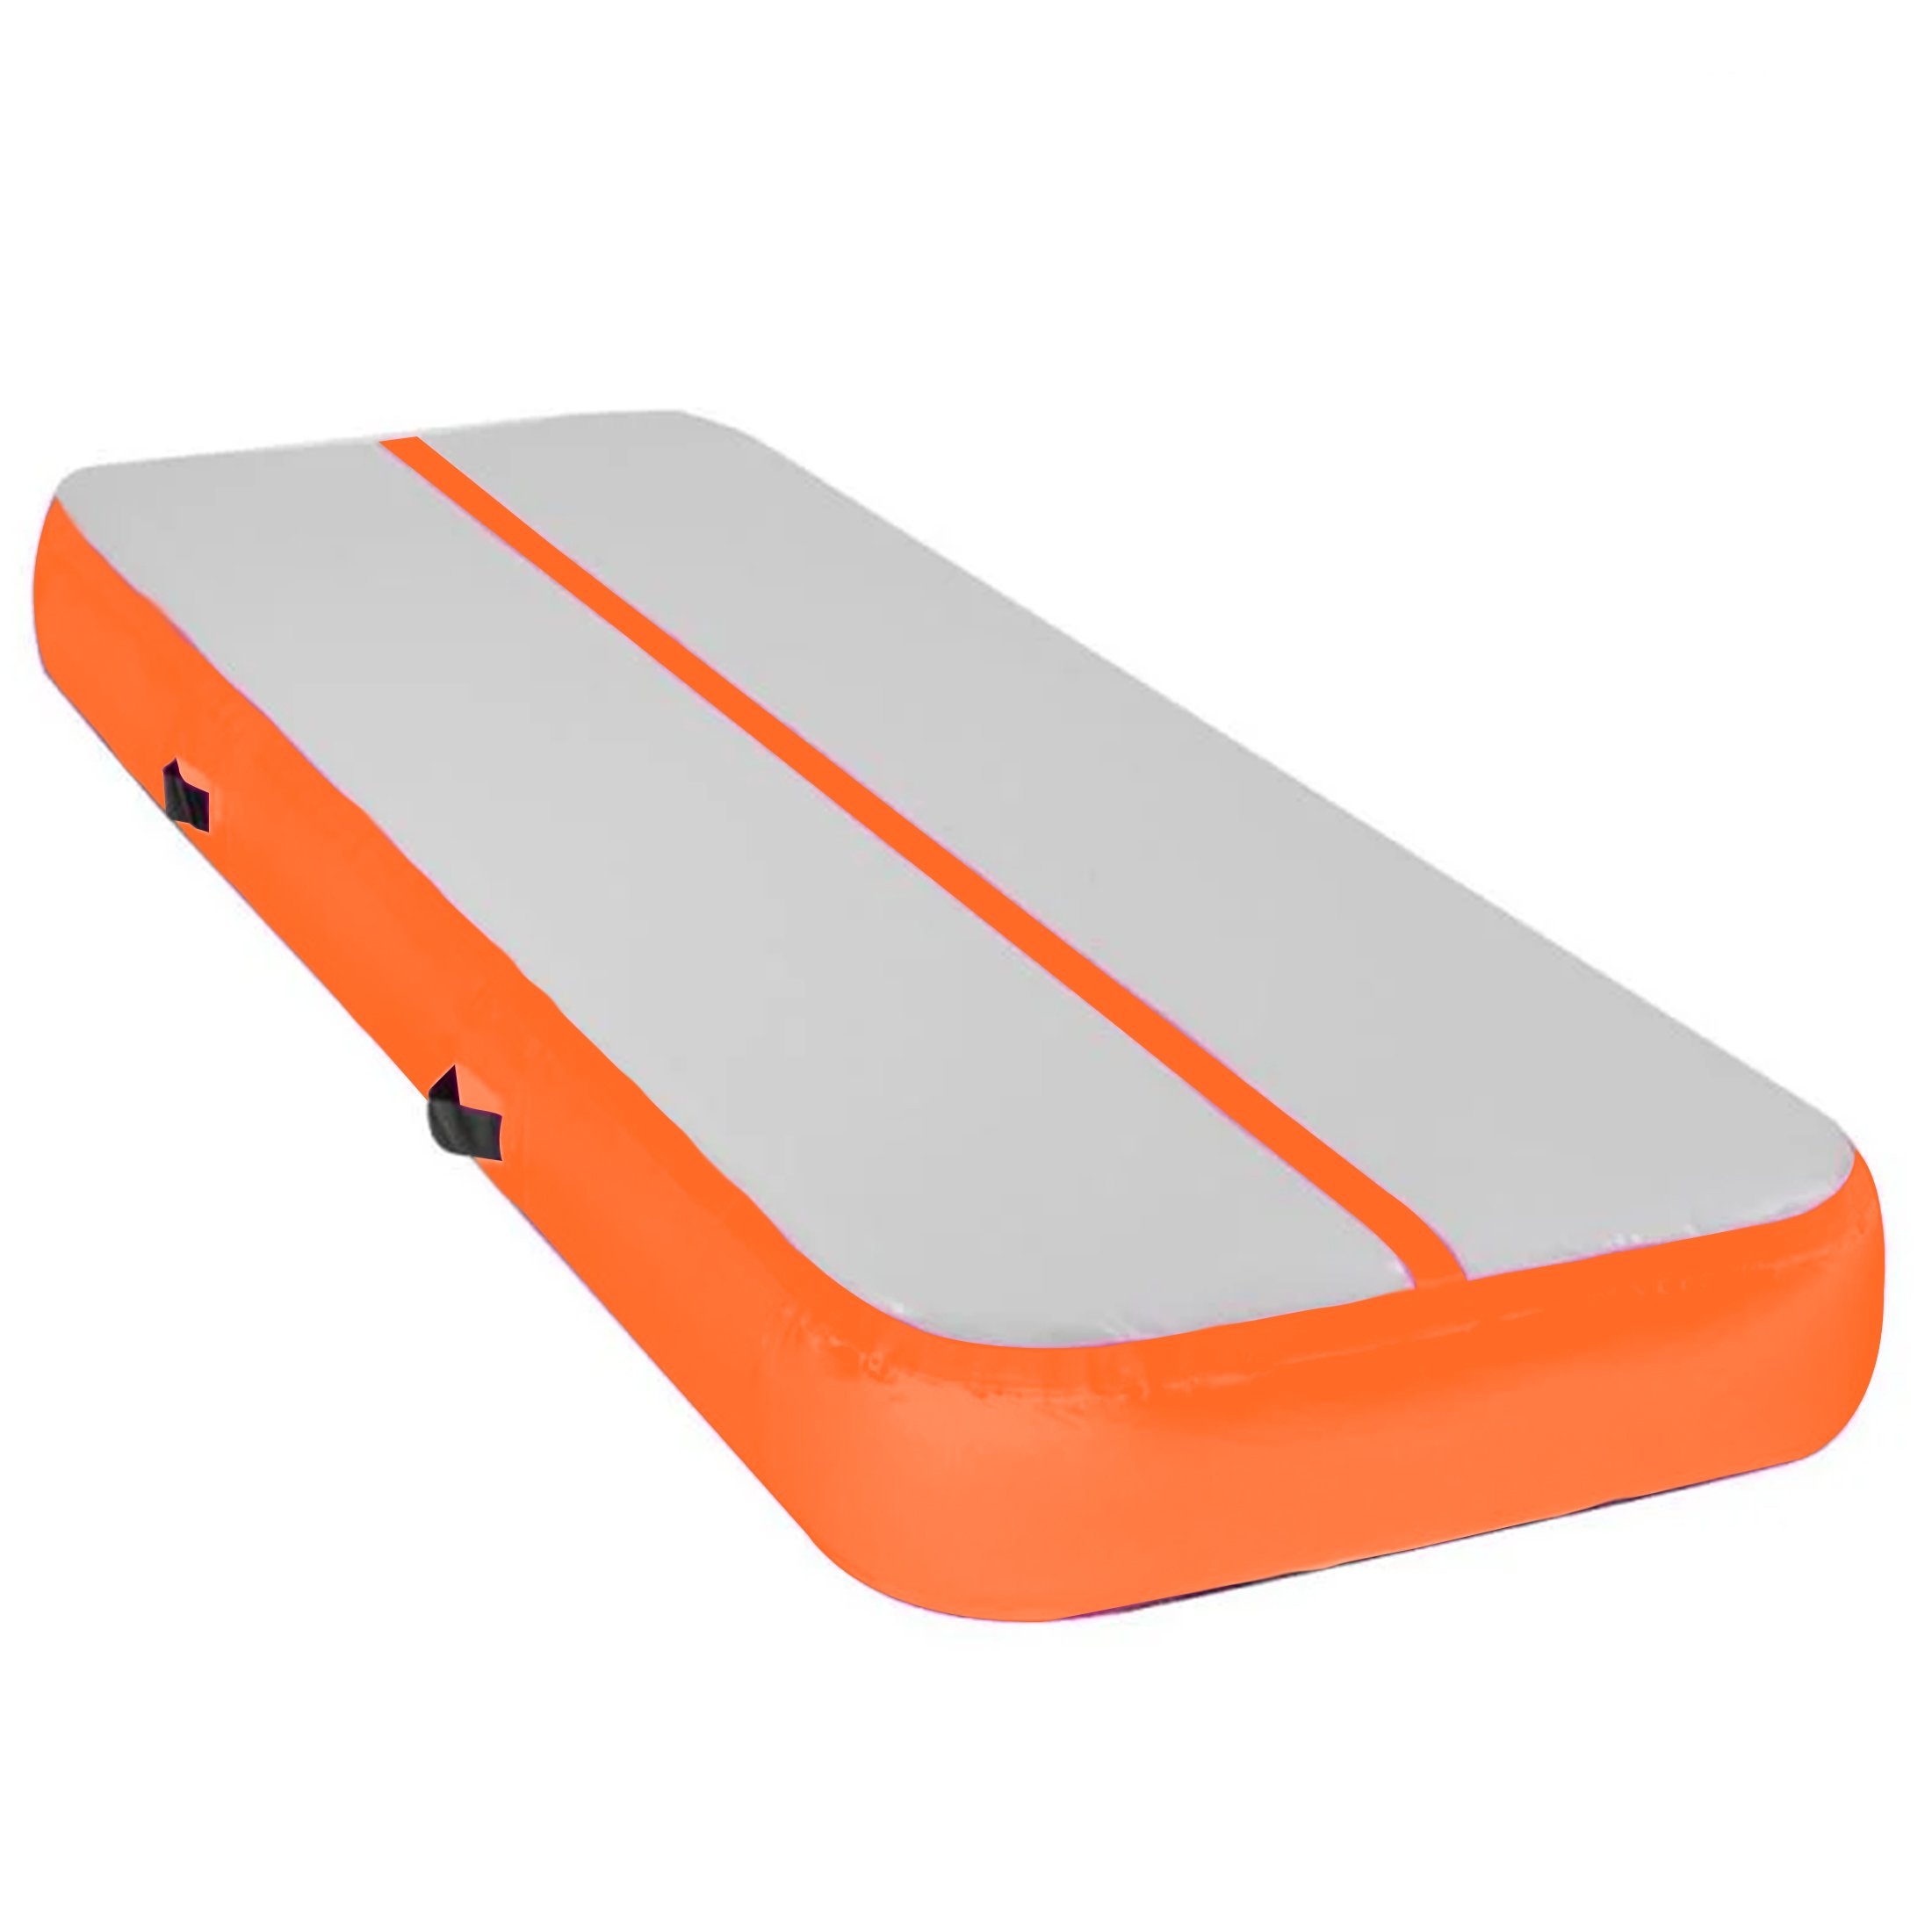 3m x 1m Air Track Inflatable Tumbling Mat Gymnastics - Orange Grey 1